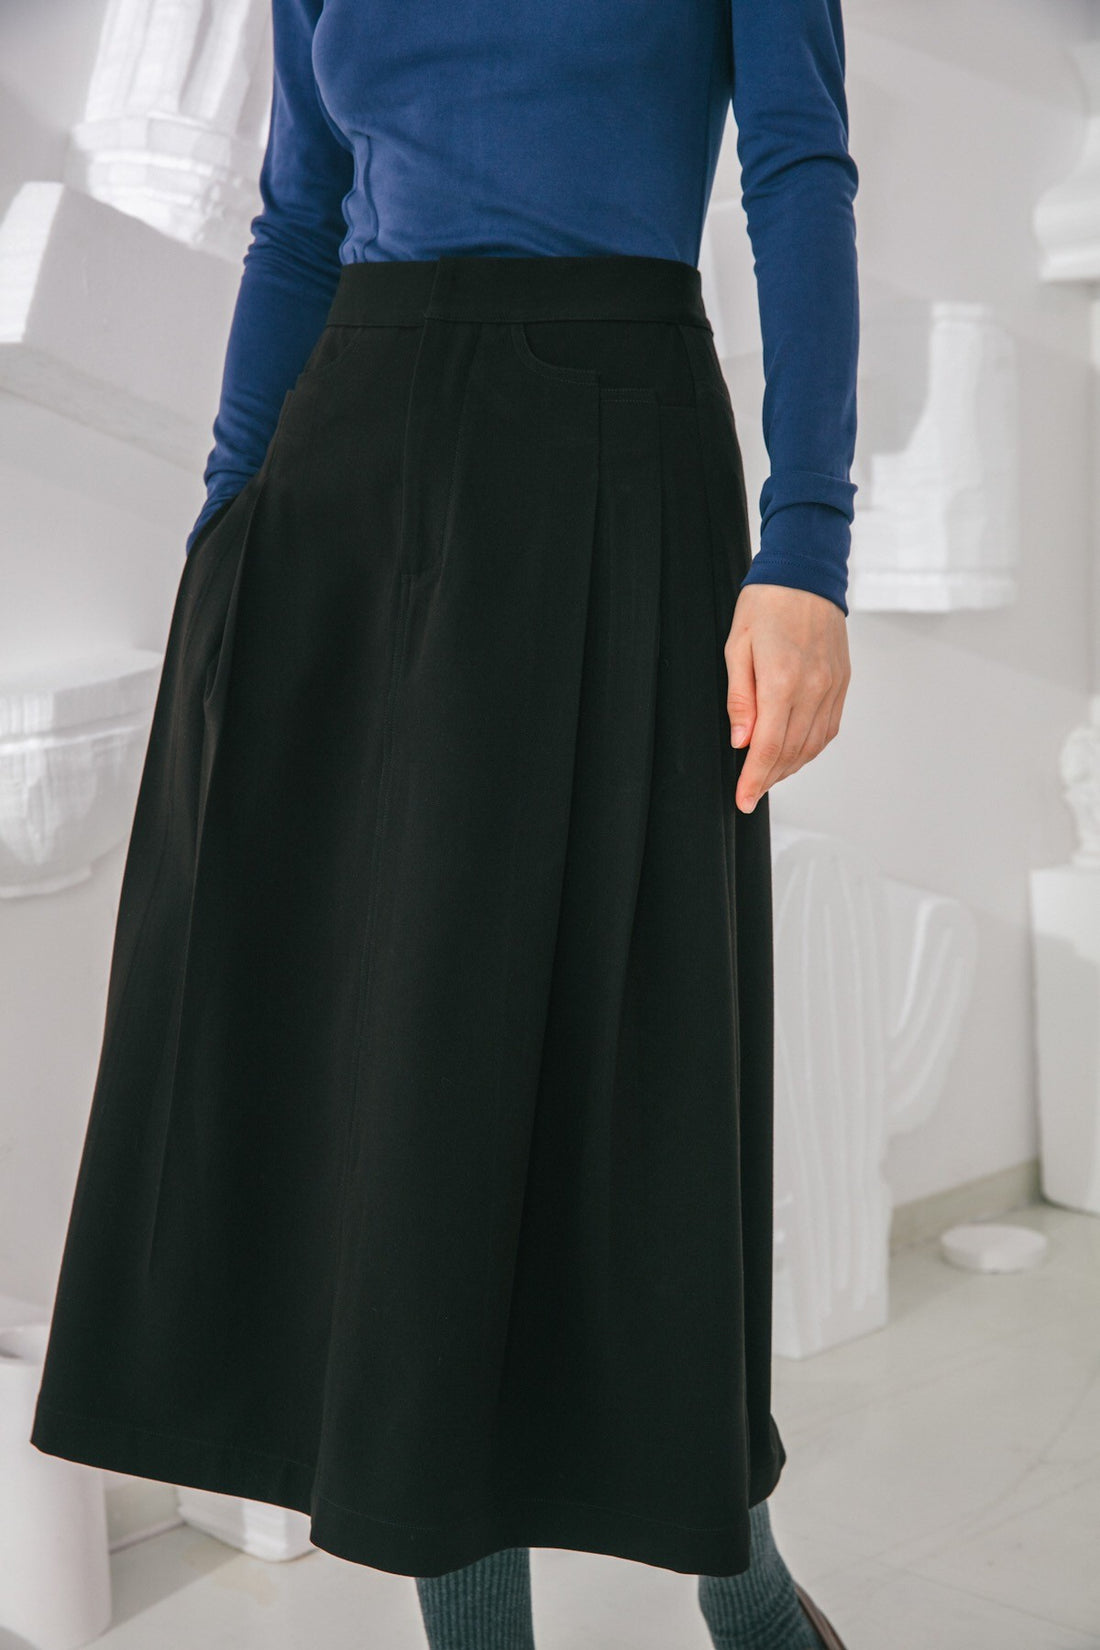 SKYE San Francisco SF shop ethical sustainable modern minimalist elegant quality women clothing fashion brand Aurelie Midi Skirt Black 4